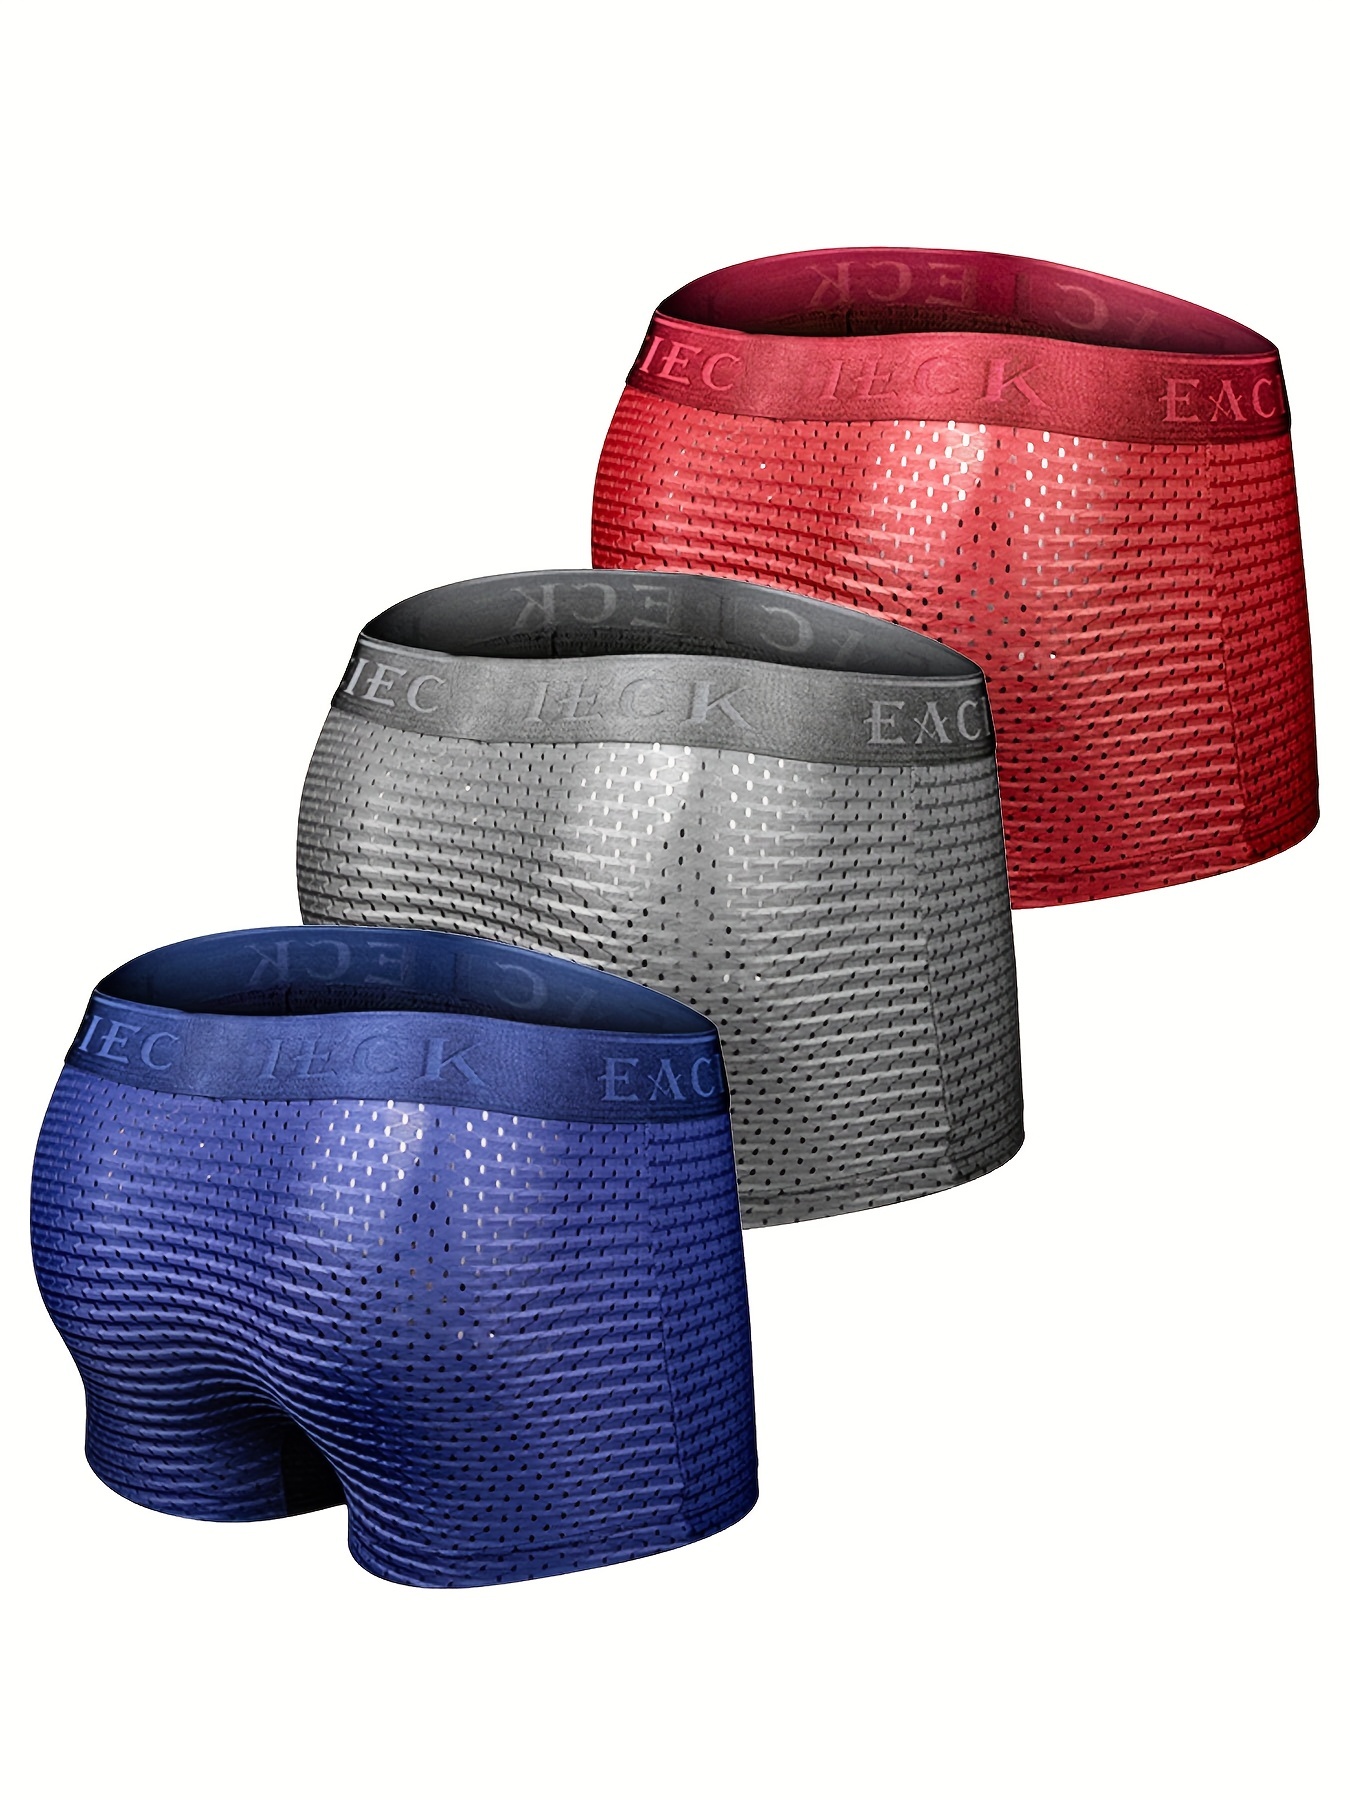 QAZXD Men's Underwear Ice Silk Sweat Absorbing Breathable Boxer